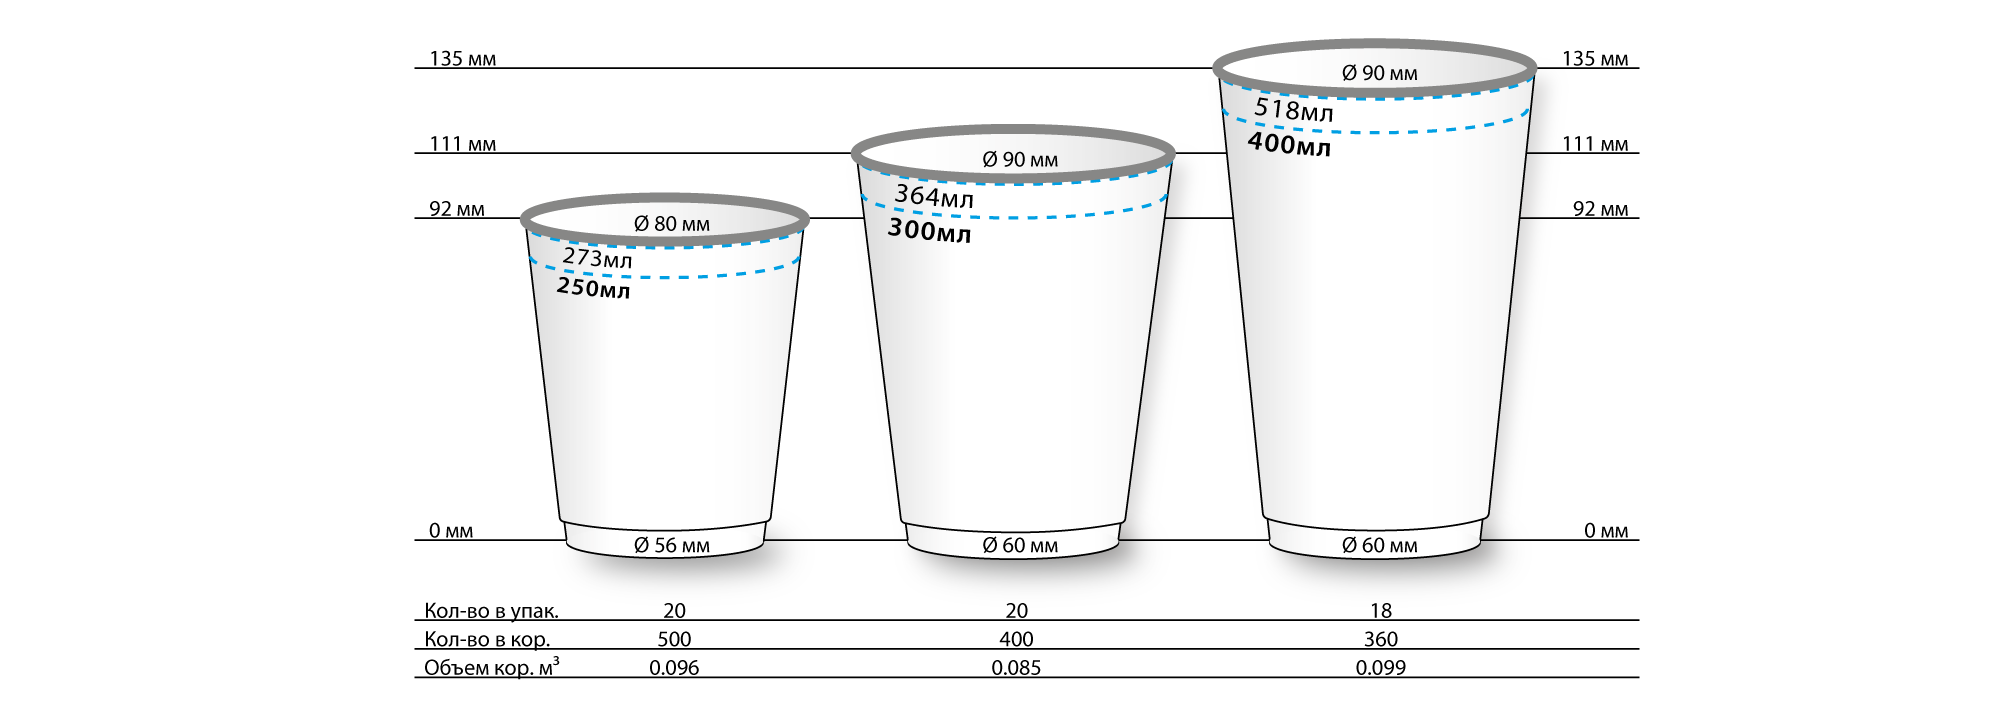 Какой диаметр стакана. Габариты стаканчика одноразового 200 мл. Размеры стаканчиков для кофе. Размер стакана. Размеры бумажных стаканчиков.